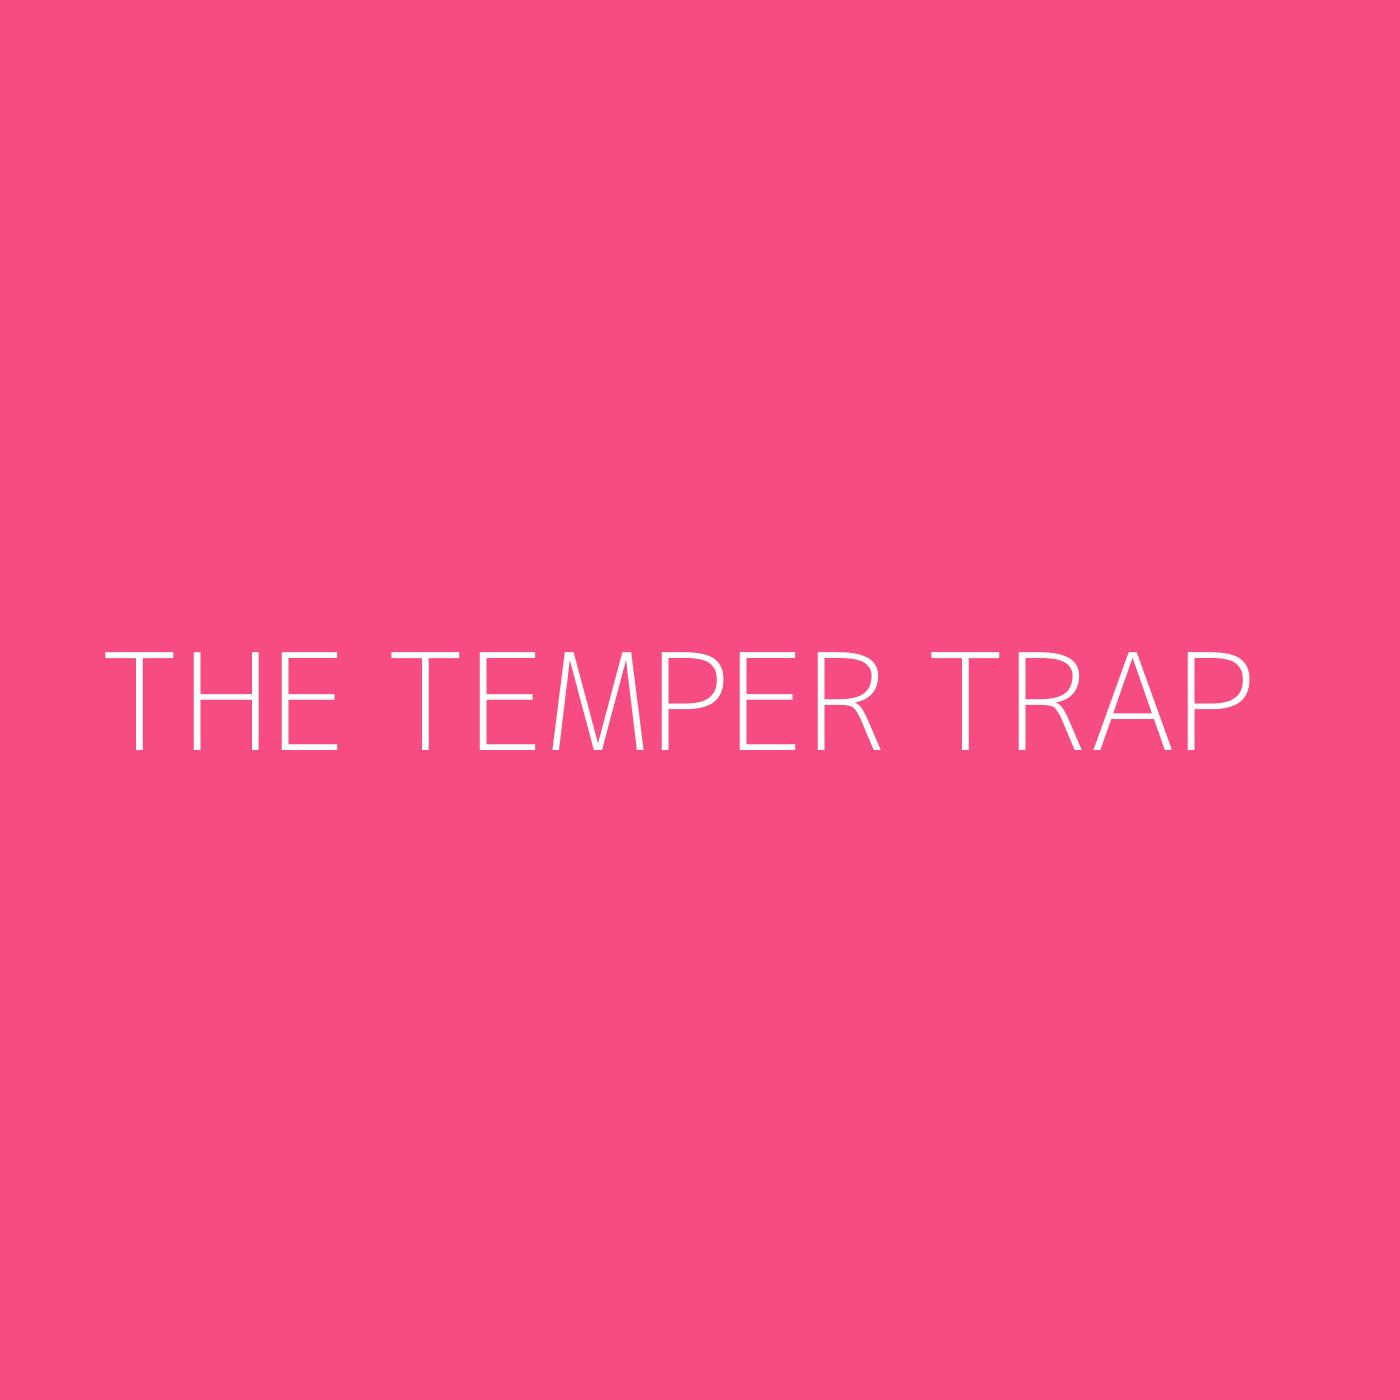 The Temper Trap Playlist Artwork